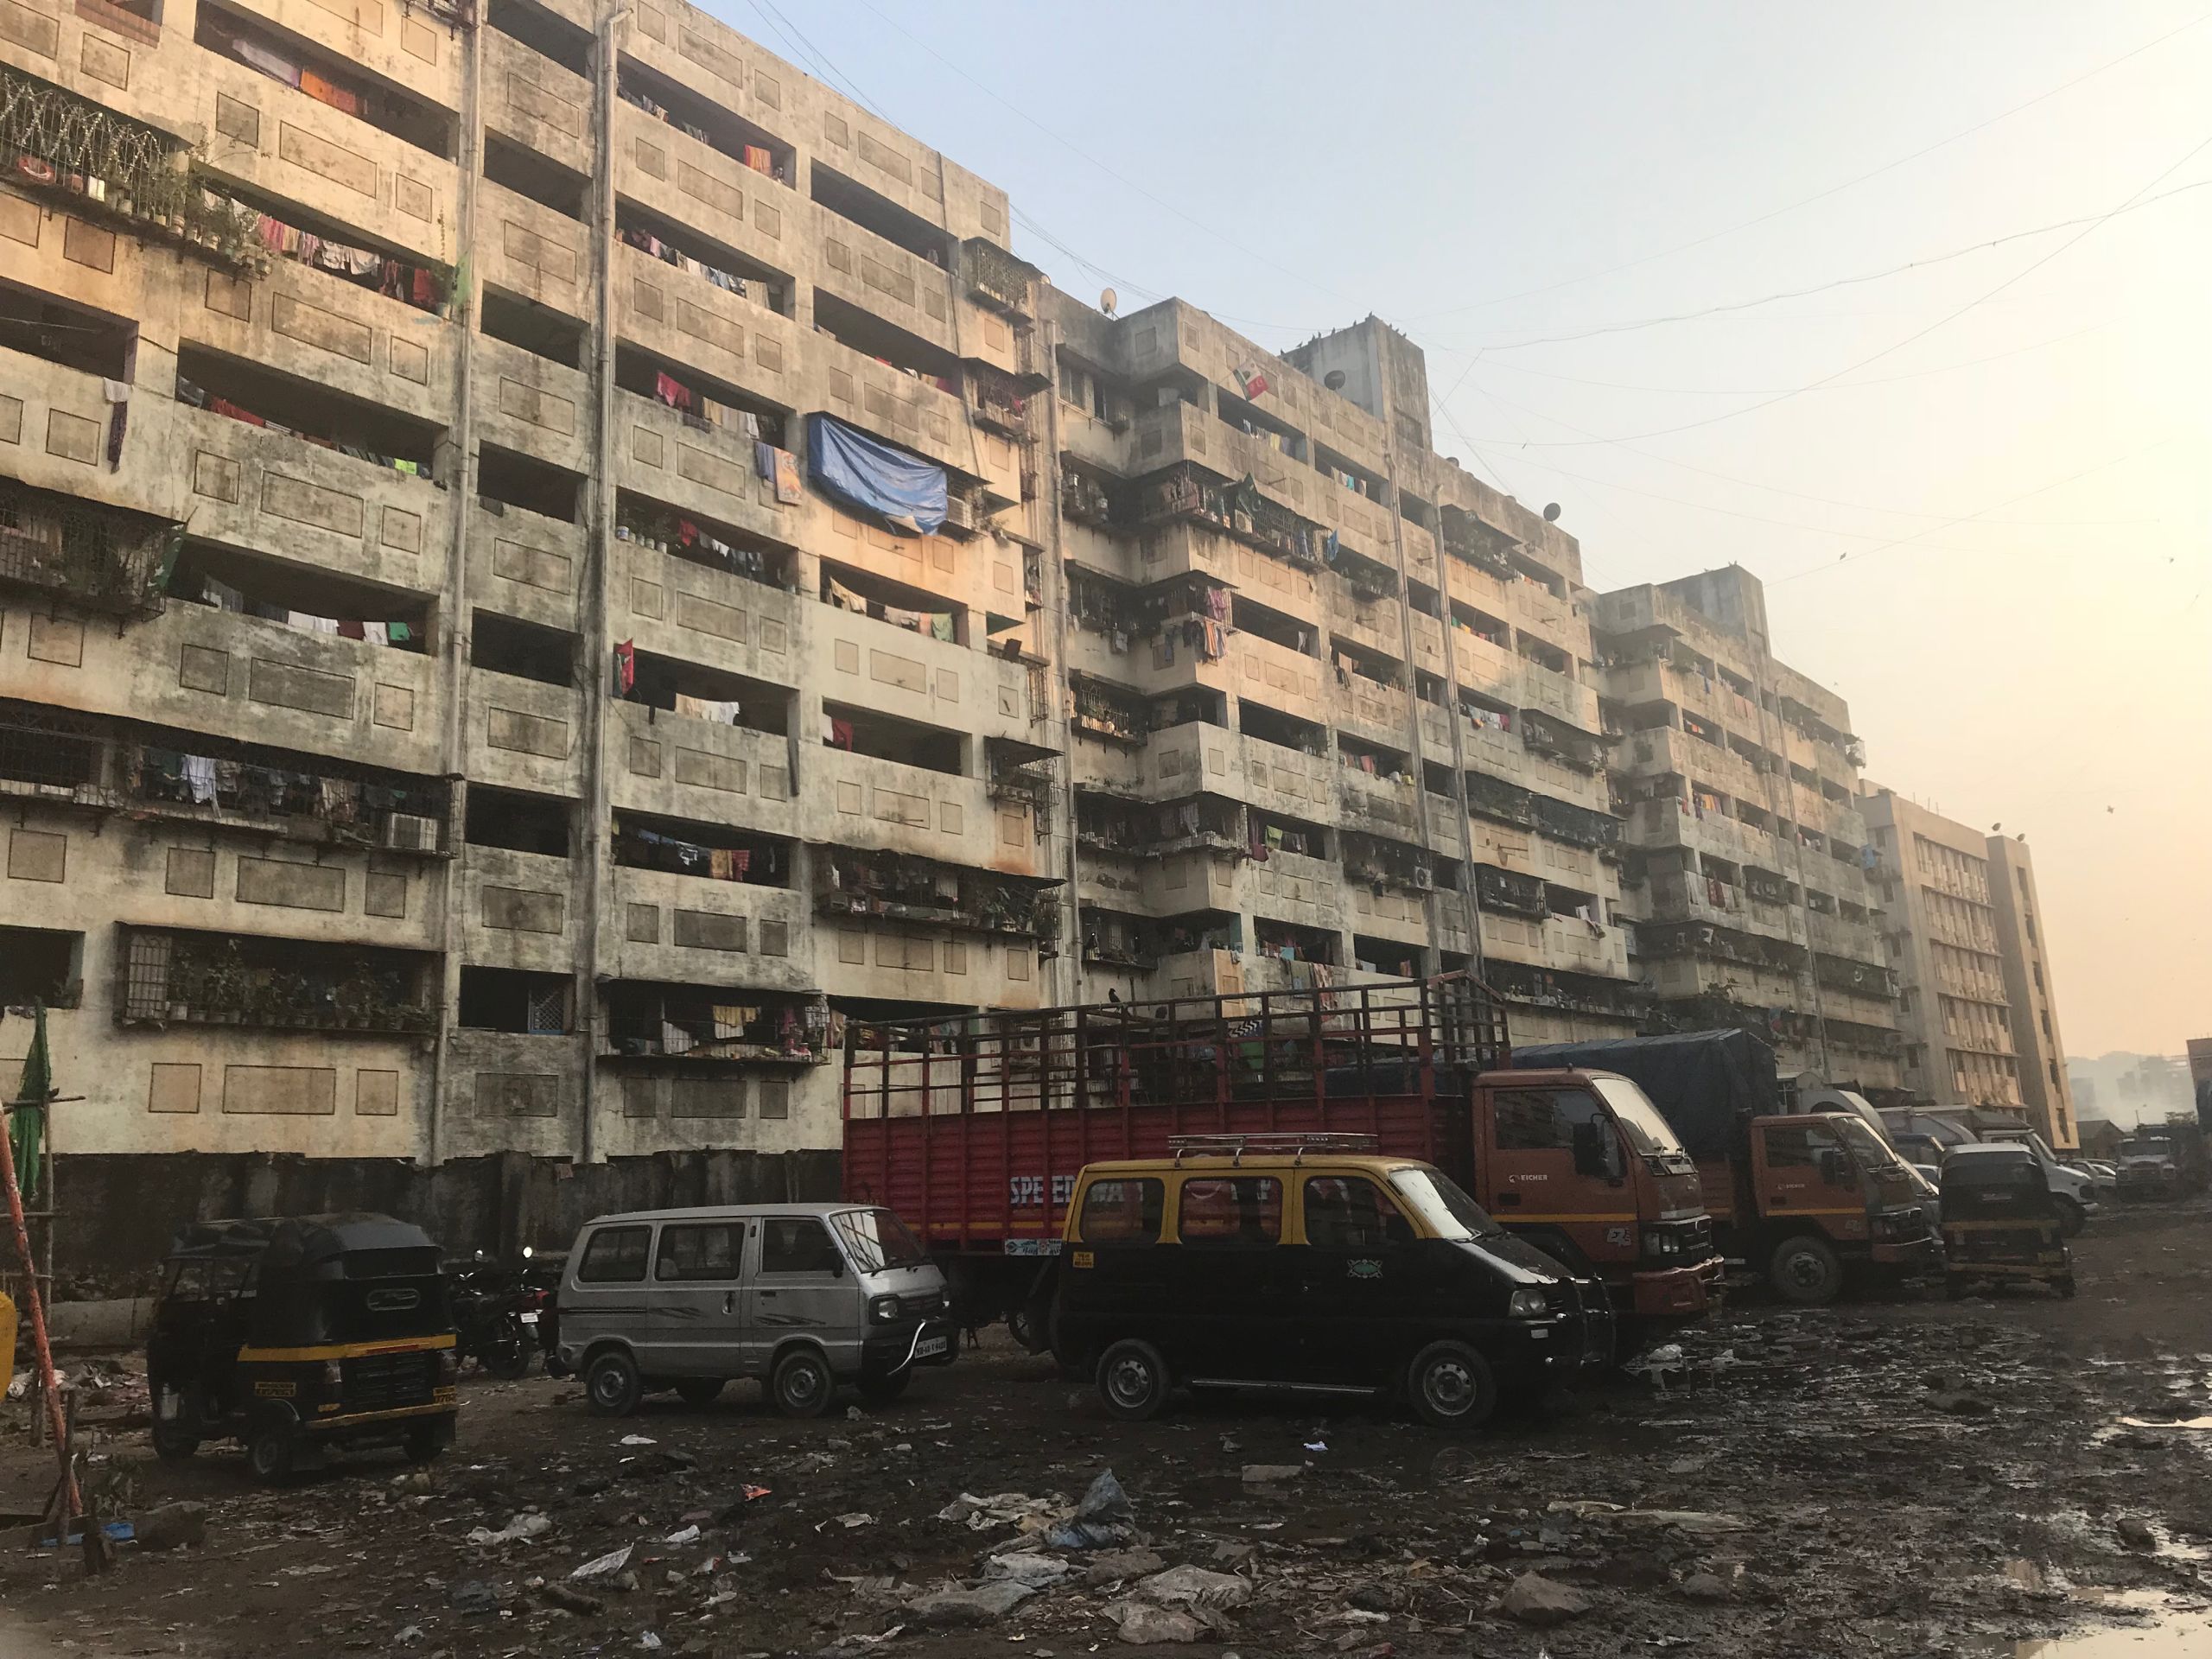 Slum rehabilitation housing in Mumbai, India (2017). Courtesy of Ronita Bardhan